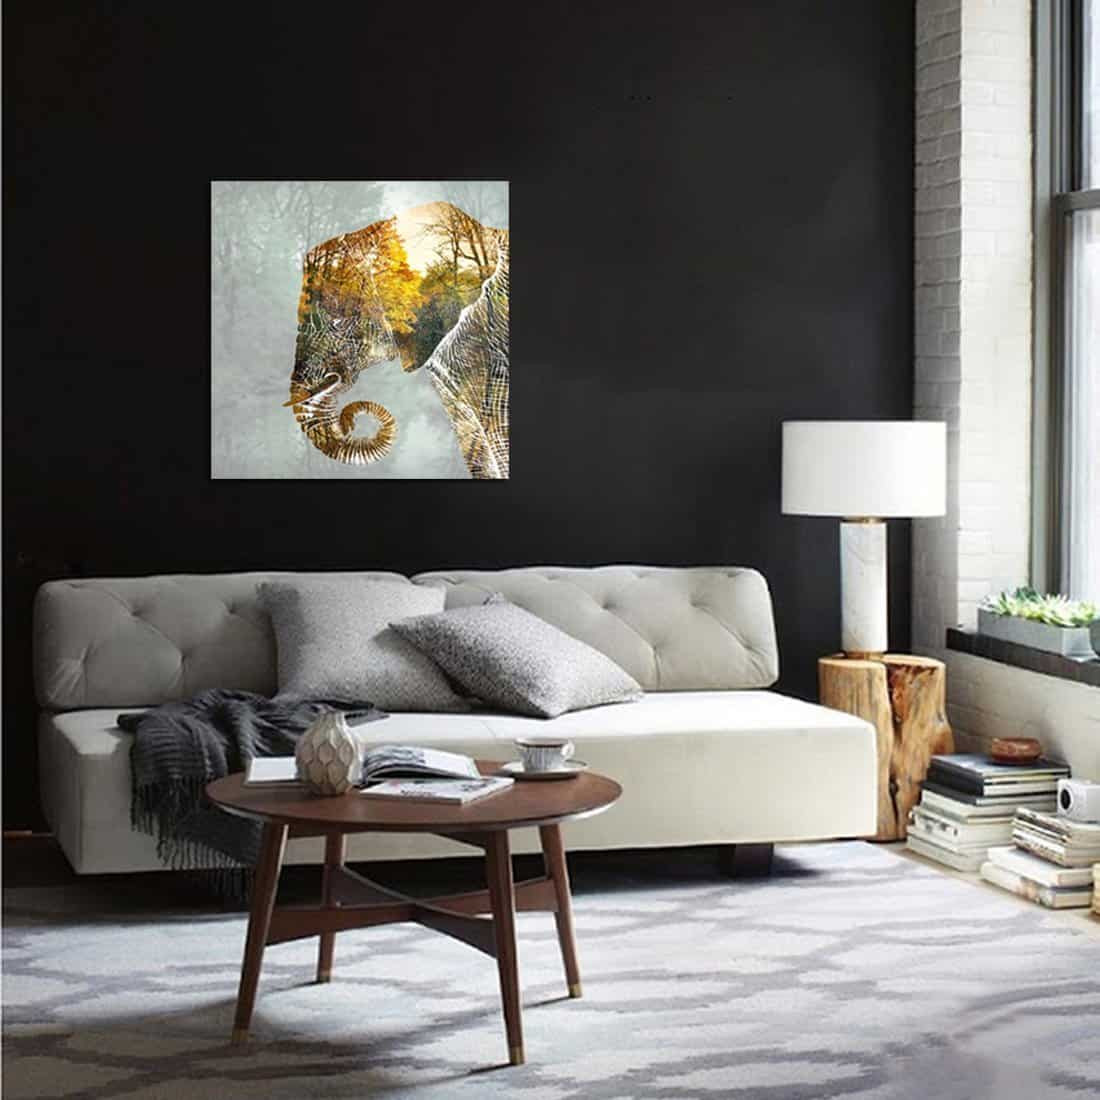 Elephant Decor for Living Room Beautiful Tips &amp; Ideas for Choosing Elephant Decor Over 40 Photos